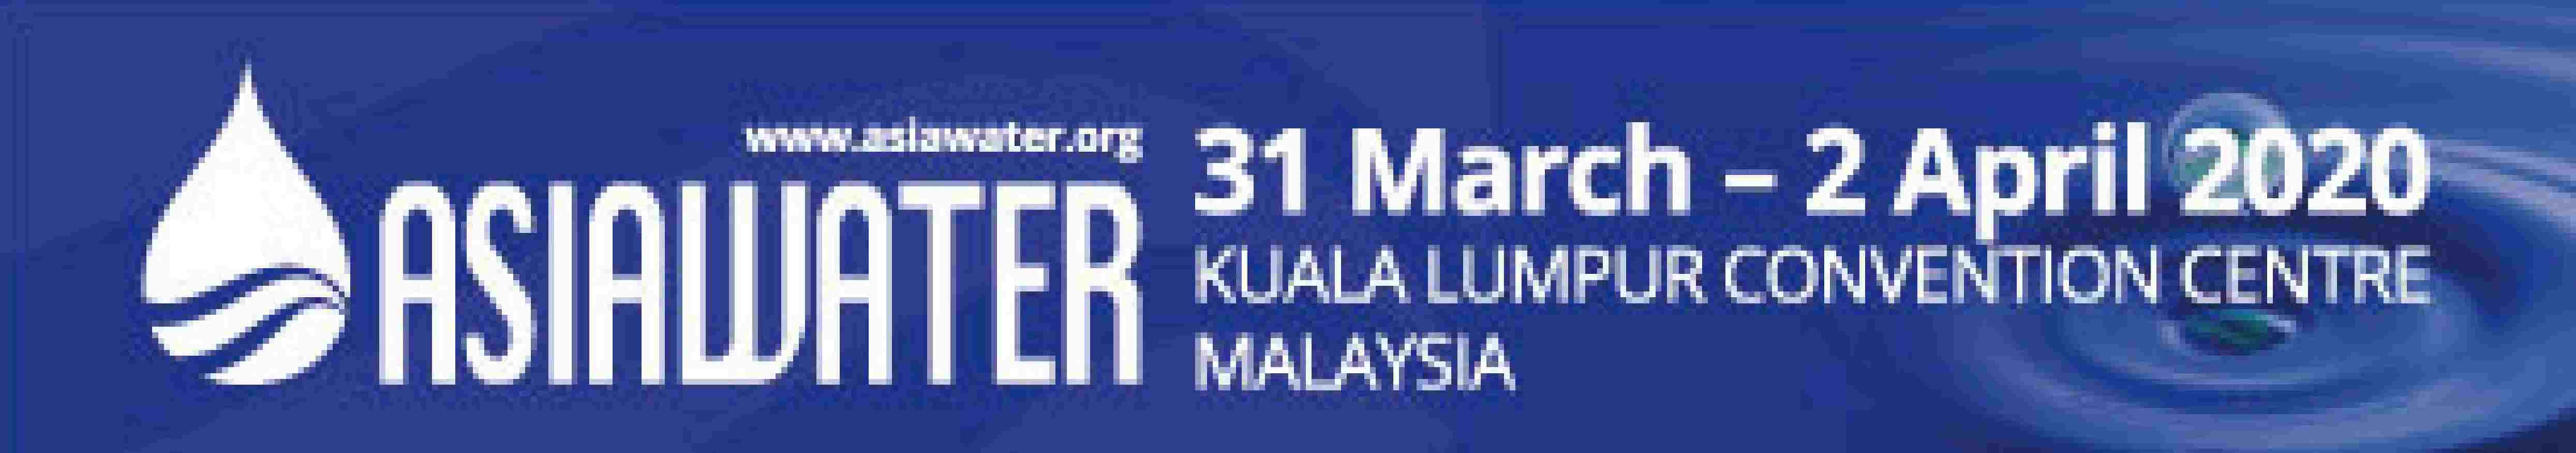 ASIAWATER 2020 – Kuala Lumpur, Malaysia